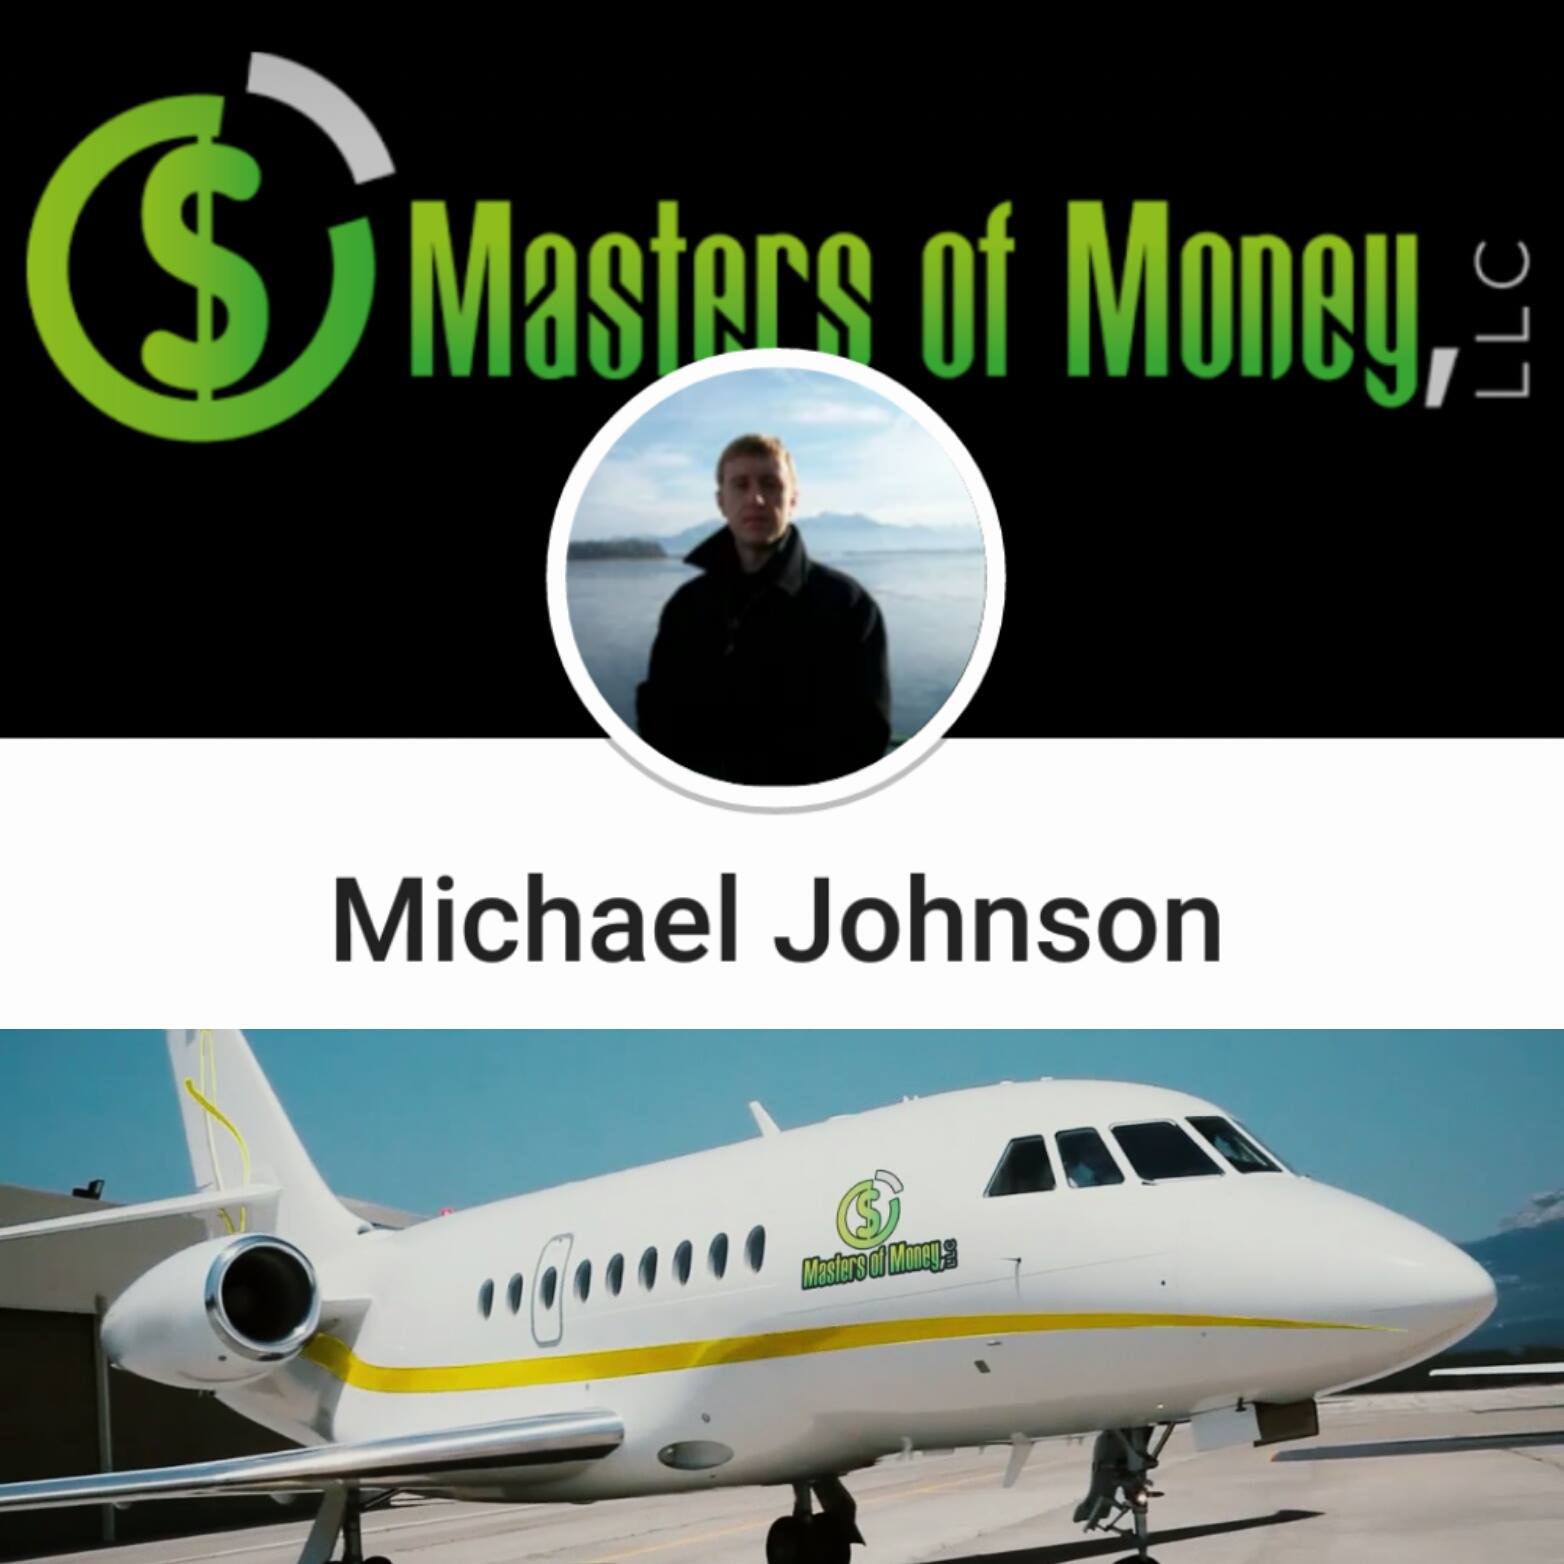 Michael Johnson - Founder & Owner - Masters of Money - 512-297-3535 - mjohnson@mastersofmoney.com